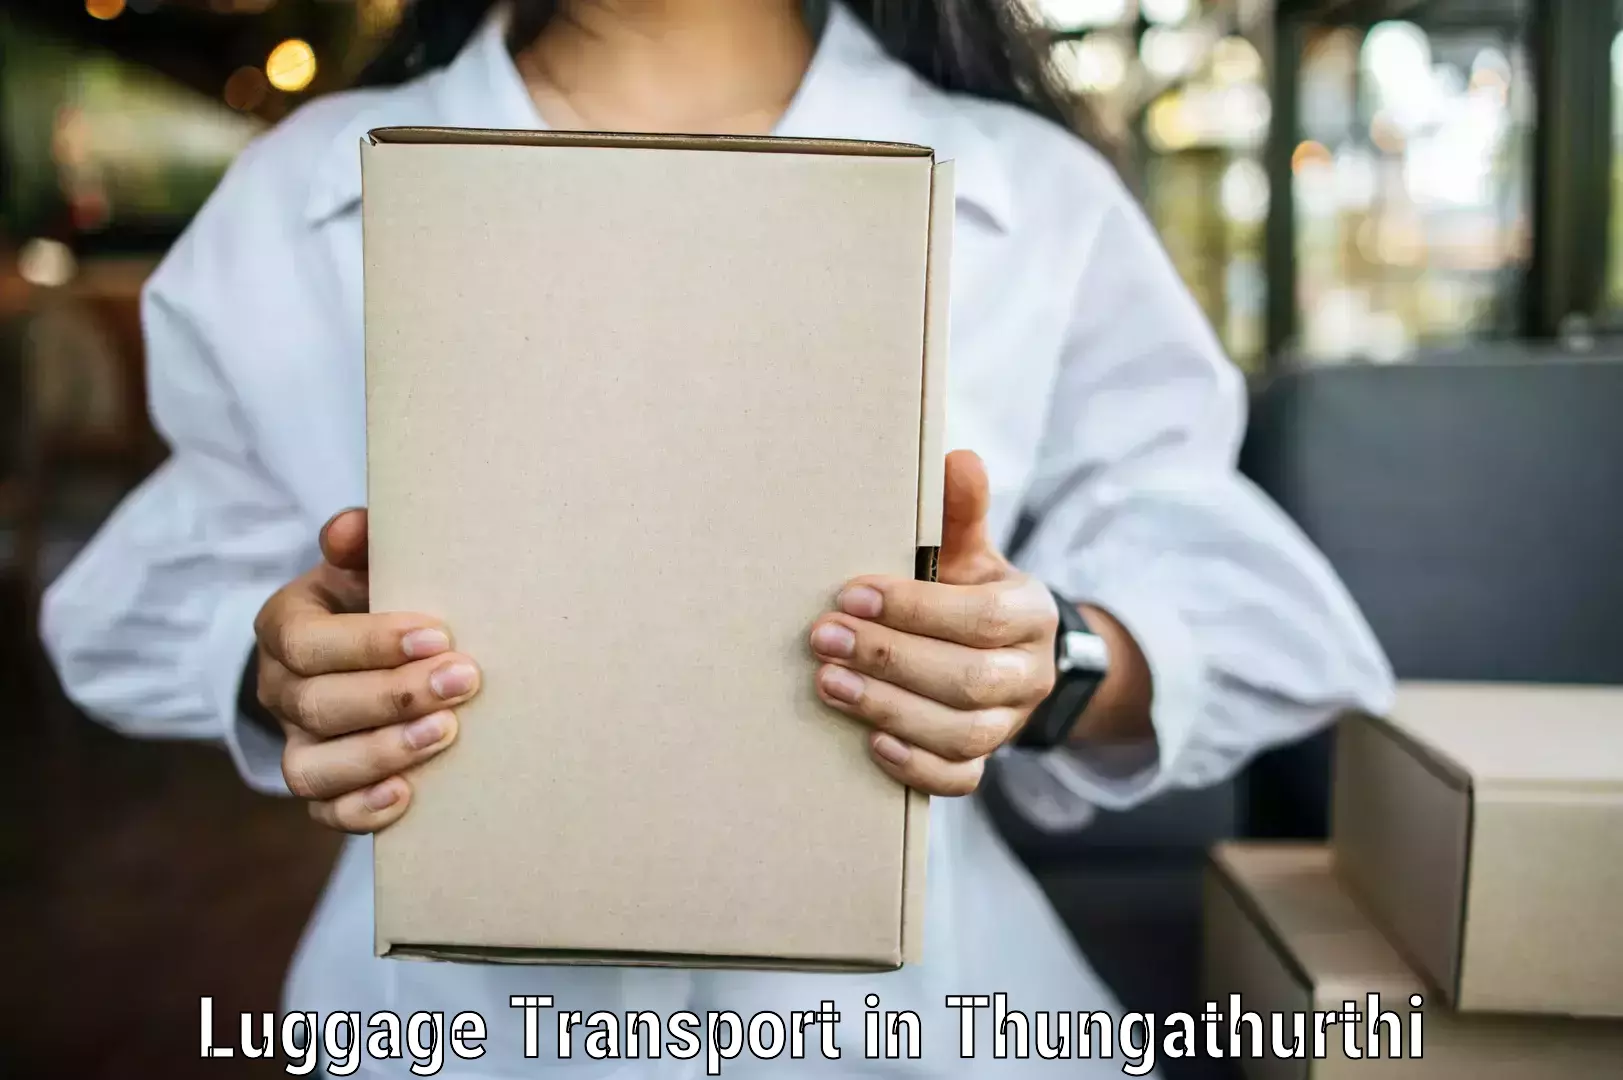 Luggage transfer service in Thungathurthi